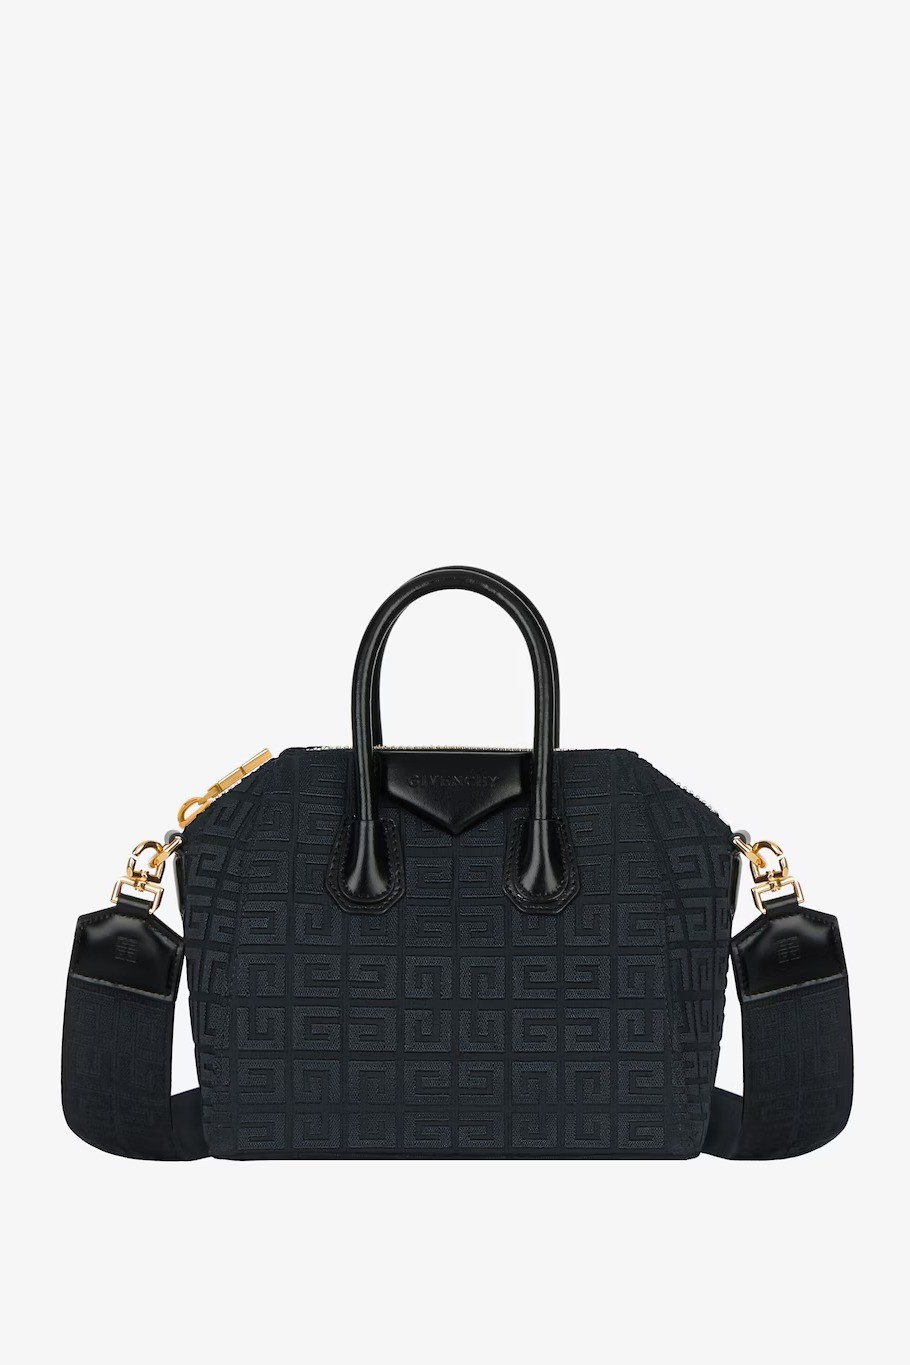 Givenchy - Mini Antigona bag in 4G embroidered canvas - Black